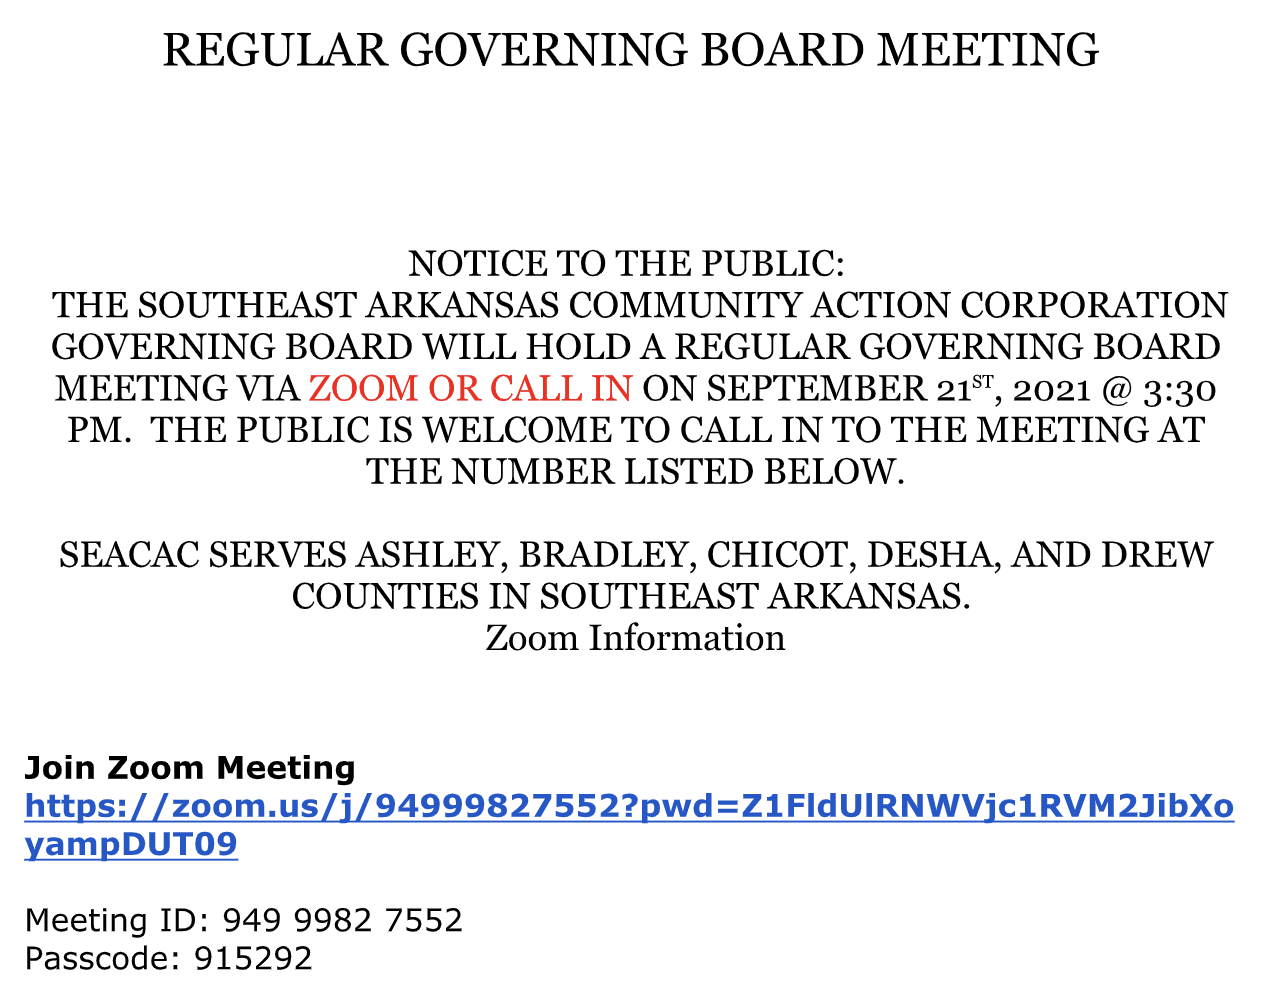 SEACAC Regular Governing Board Meeting September 21